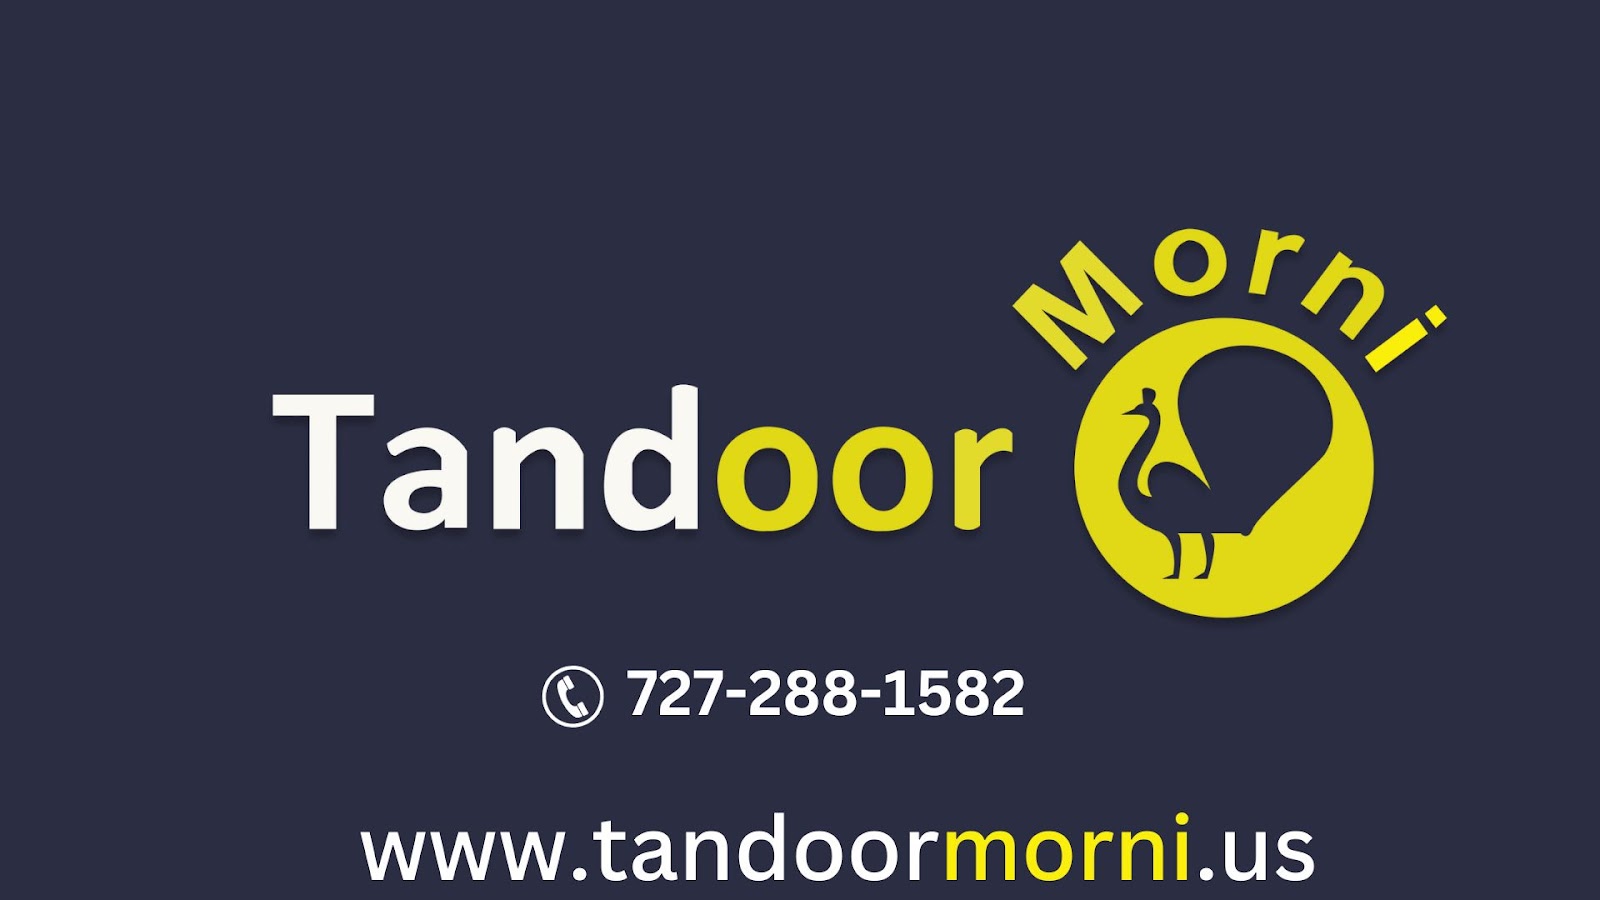 Order a tandoor oven from Morni Tandoor to elevate your barbecue tandoori chicken.